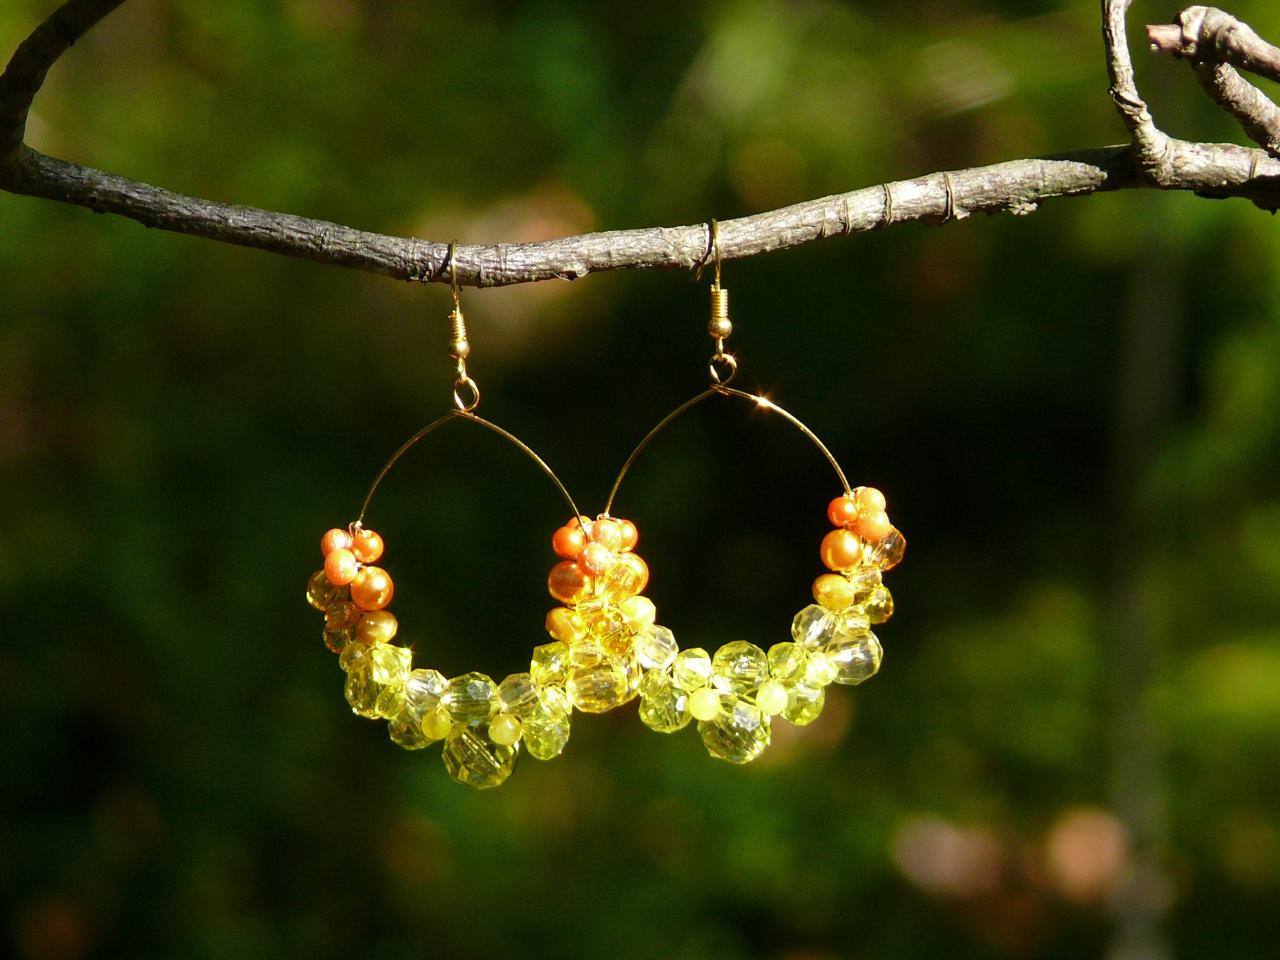 Yellow Hoop Earrings, Ombre Beaded Hoops With Glass Beads, Large Hoop Earrings, Golden Boho Earrings, Gift For Her, 3 Inch Hoops